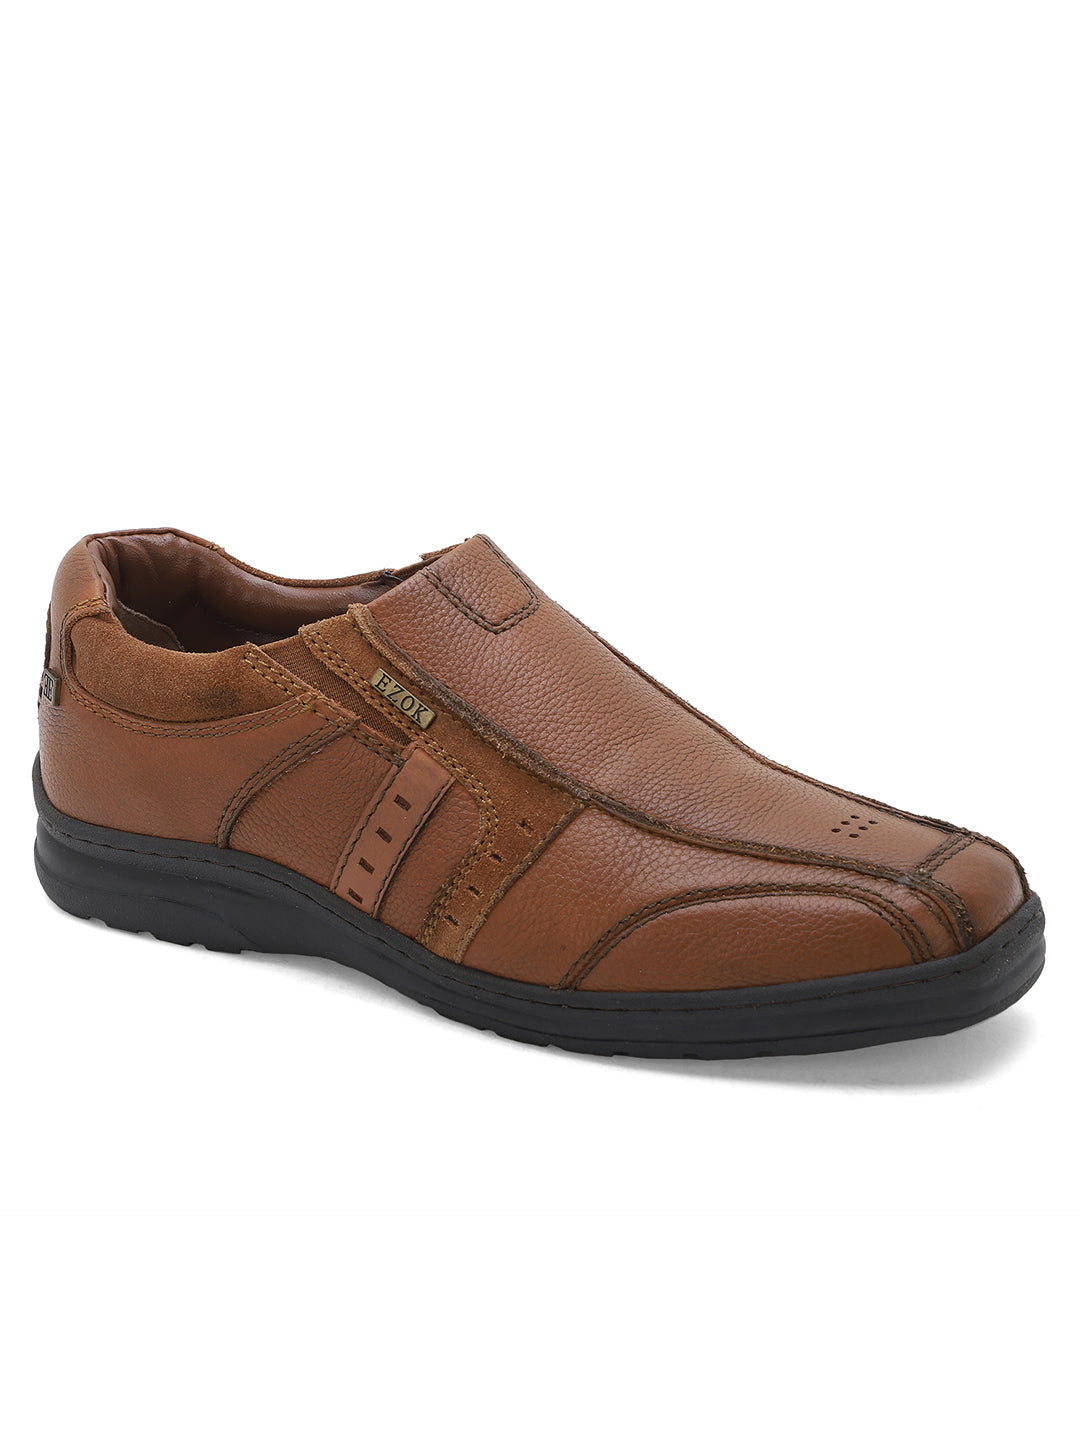 Ezok Men's Genuine Leather Slip-Ons Shoes